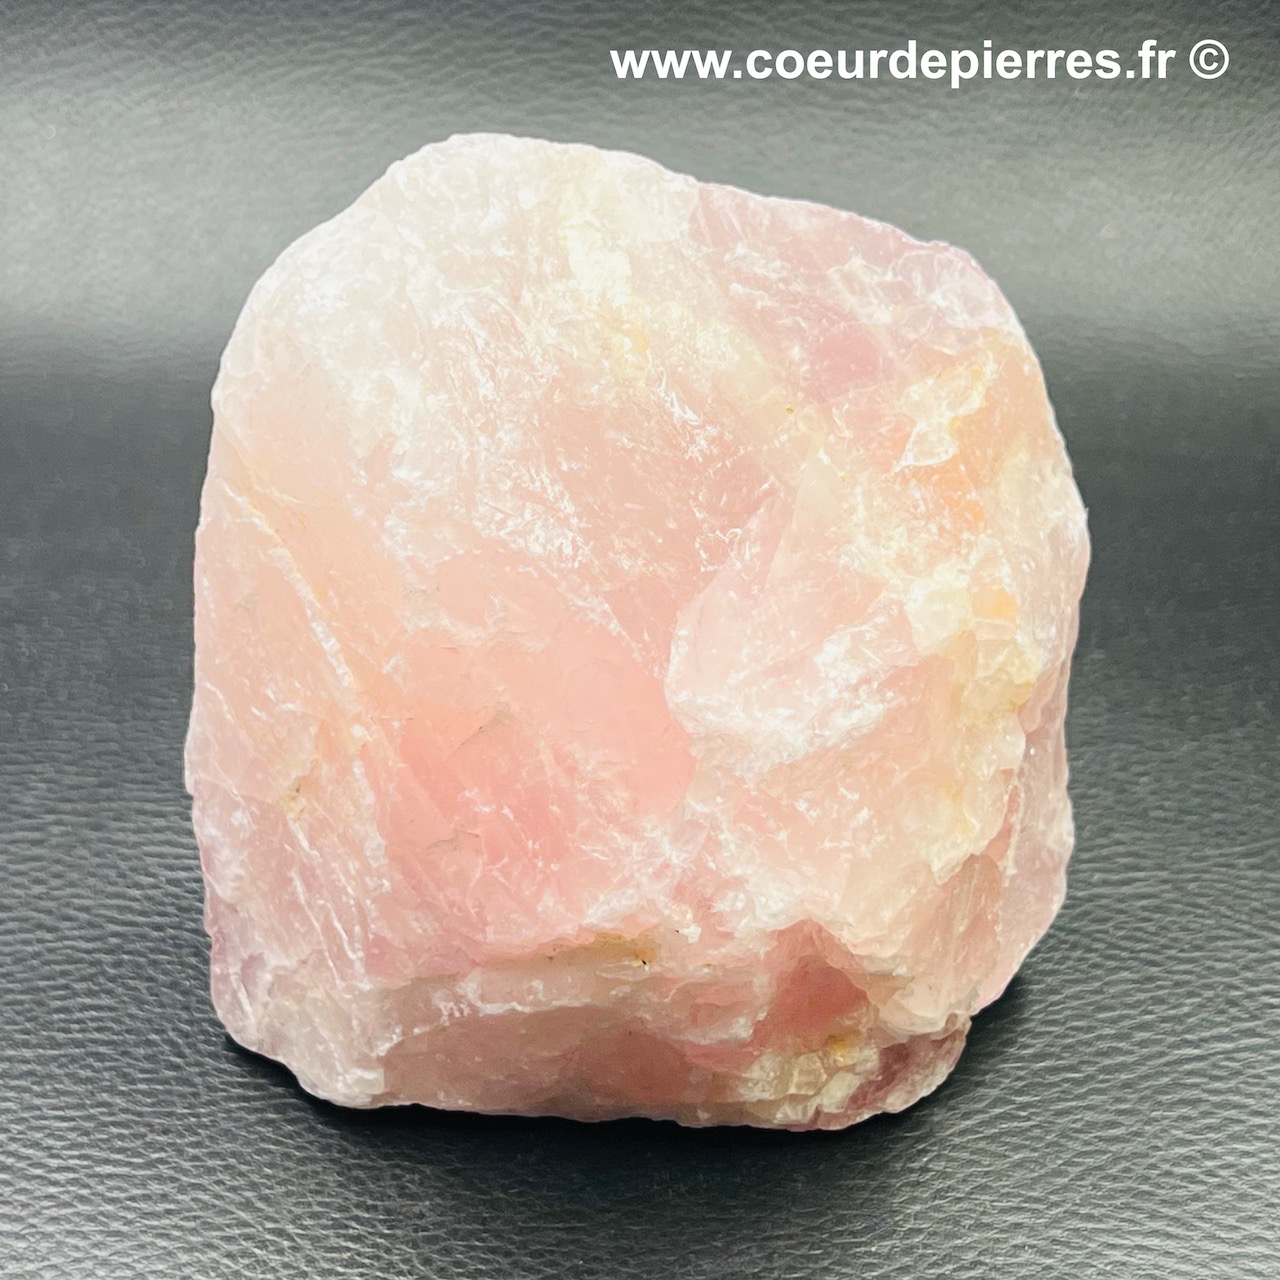 Bloc brut de quartz rose de Madagascar (réf prb11)